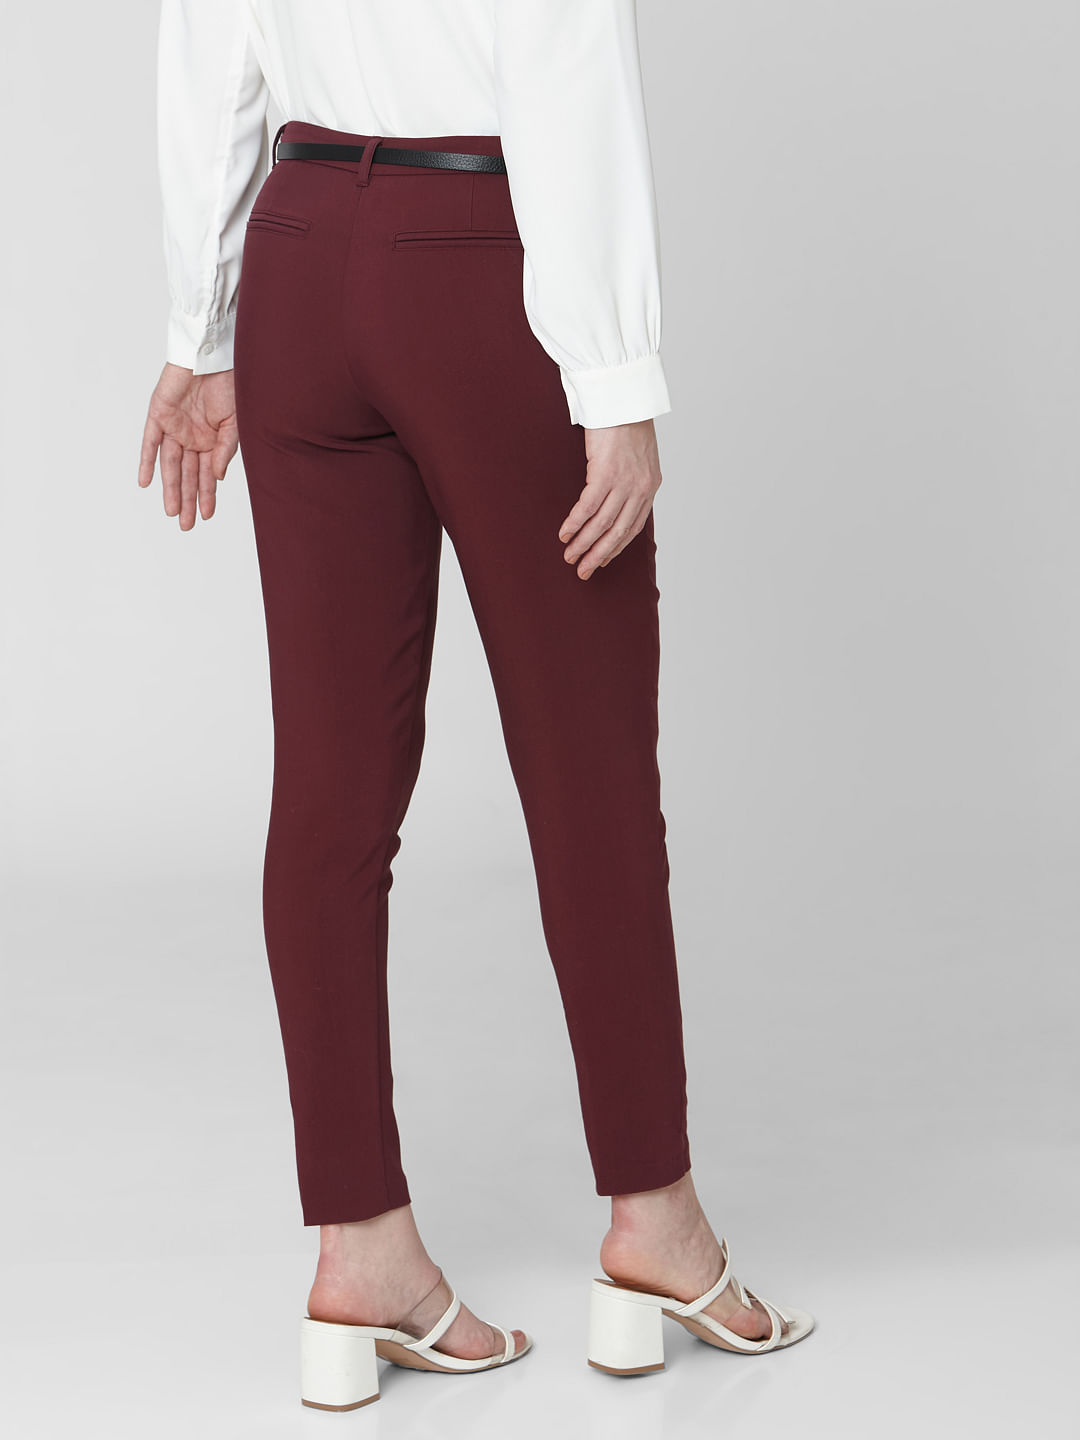 Buy Burgundy Trousers  Pants for Women by Deal Jeans Online  Ajiocom